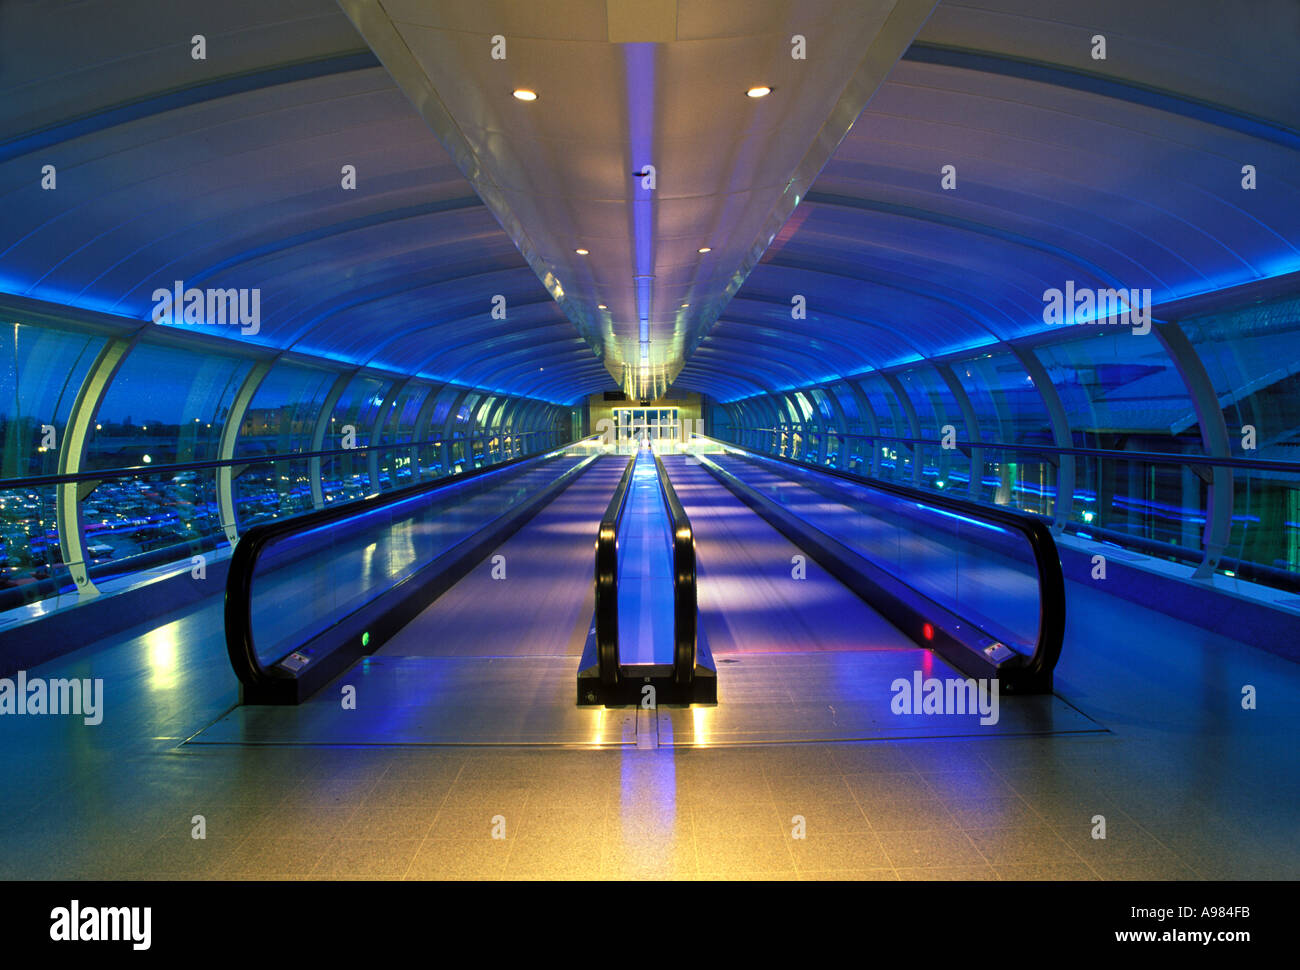 Passenger corridor and escalator at dawn between terminals 1 and 2 at Manchester Airport, UK Stock Photo